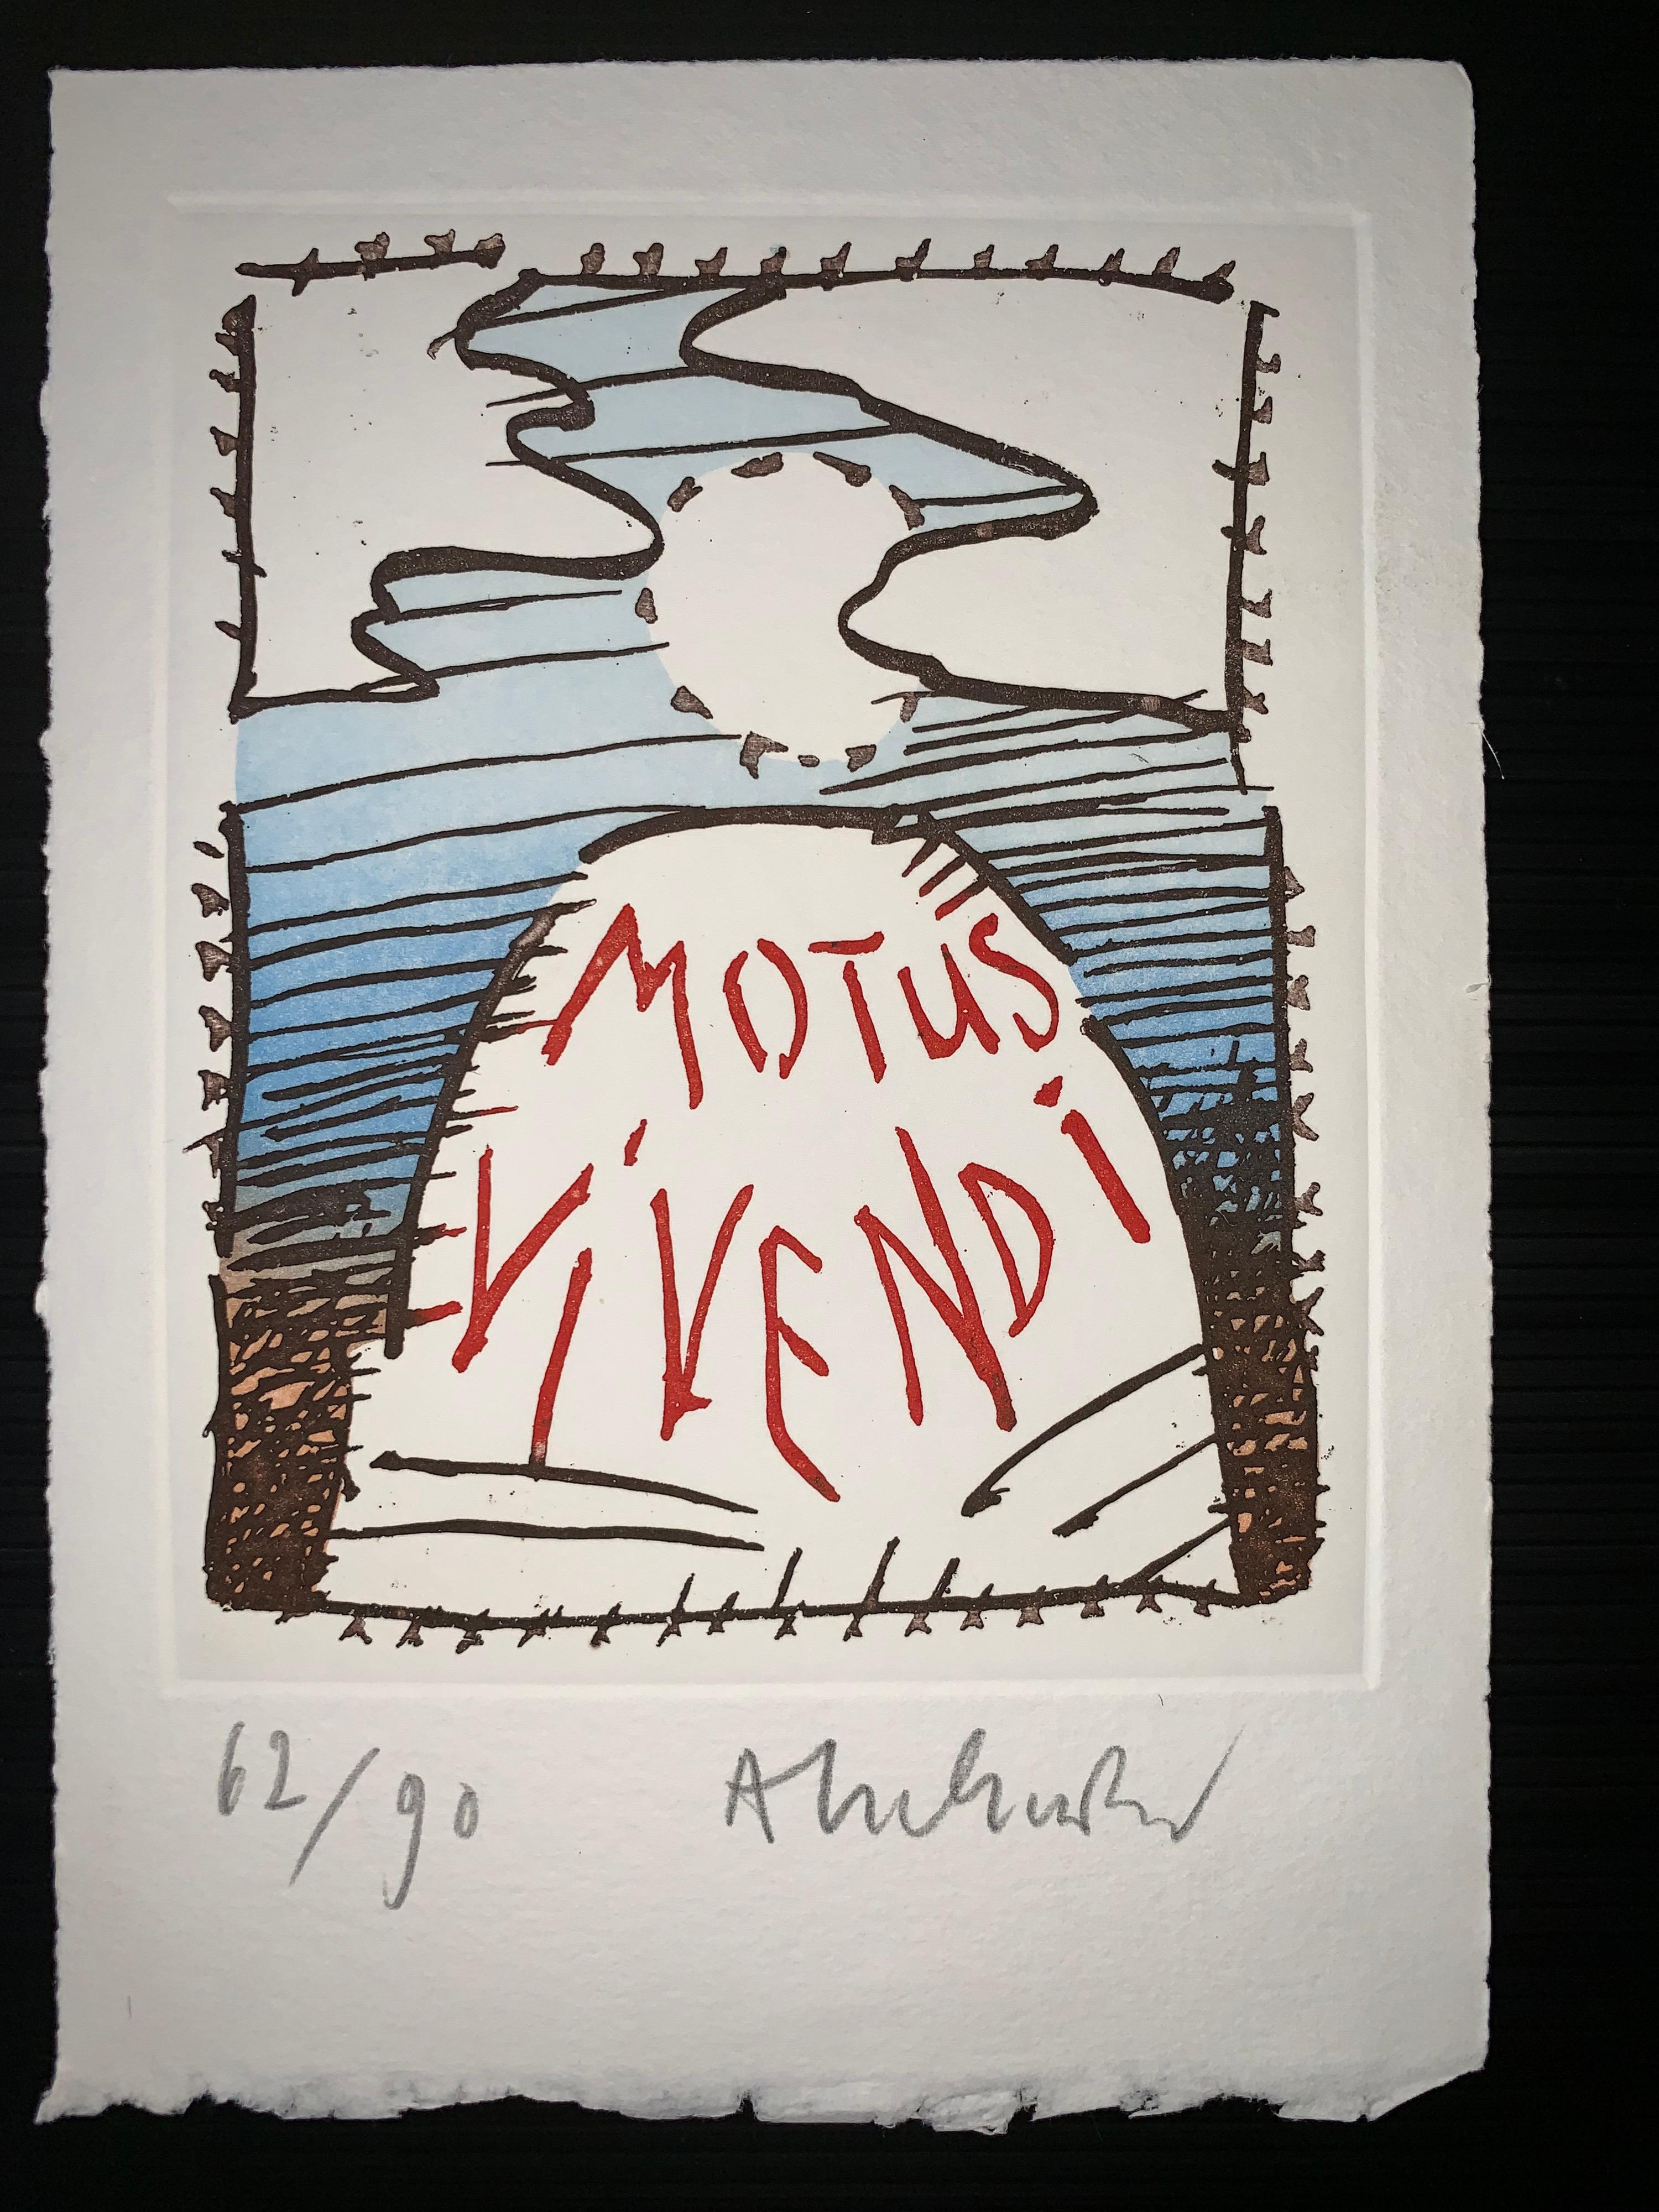 Motus Vivendi - Etching - Pierre Alechinksy - 2008 - numbered - edition 90- 2008 - Print by Pierre Alechinsky 